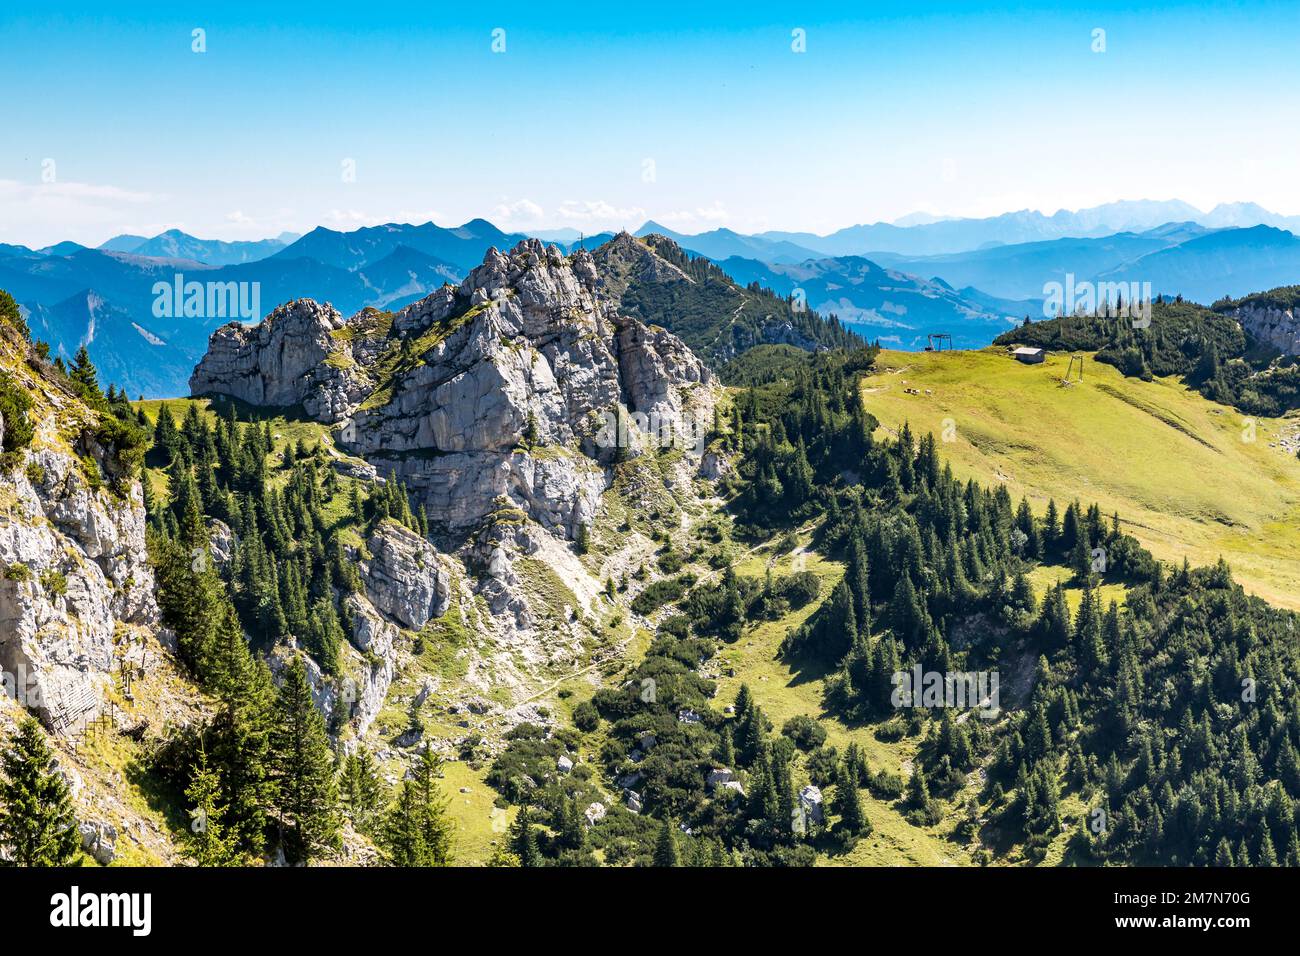 View from Wendelstein to the mountains, Kesselwand, 1721 m, Ski lift Lacherlift, Bayrischzell, Upper Bavaria, Bavaria, Germany, Europe Stock Photo